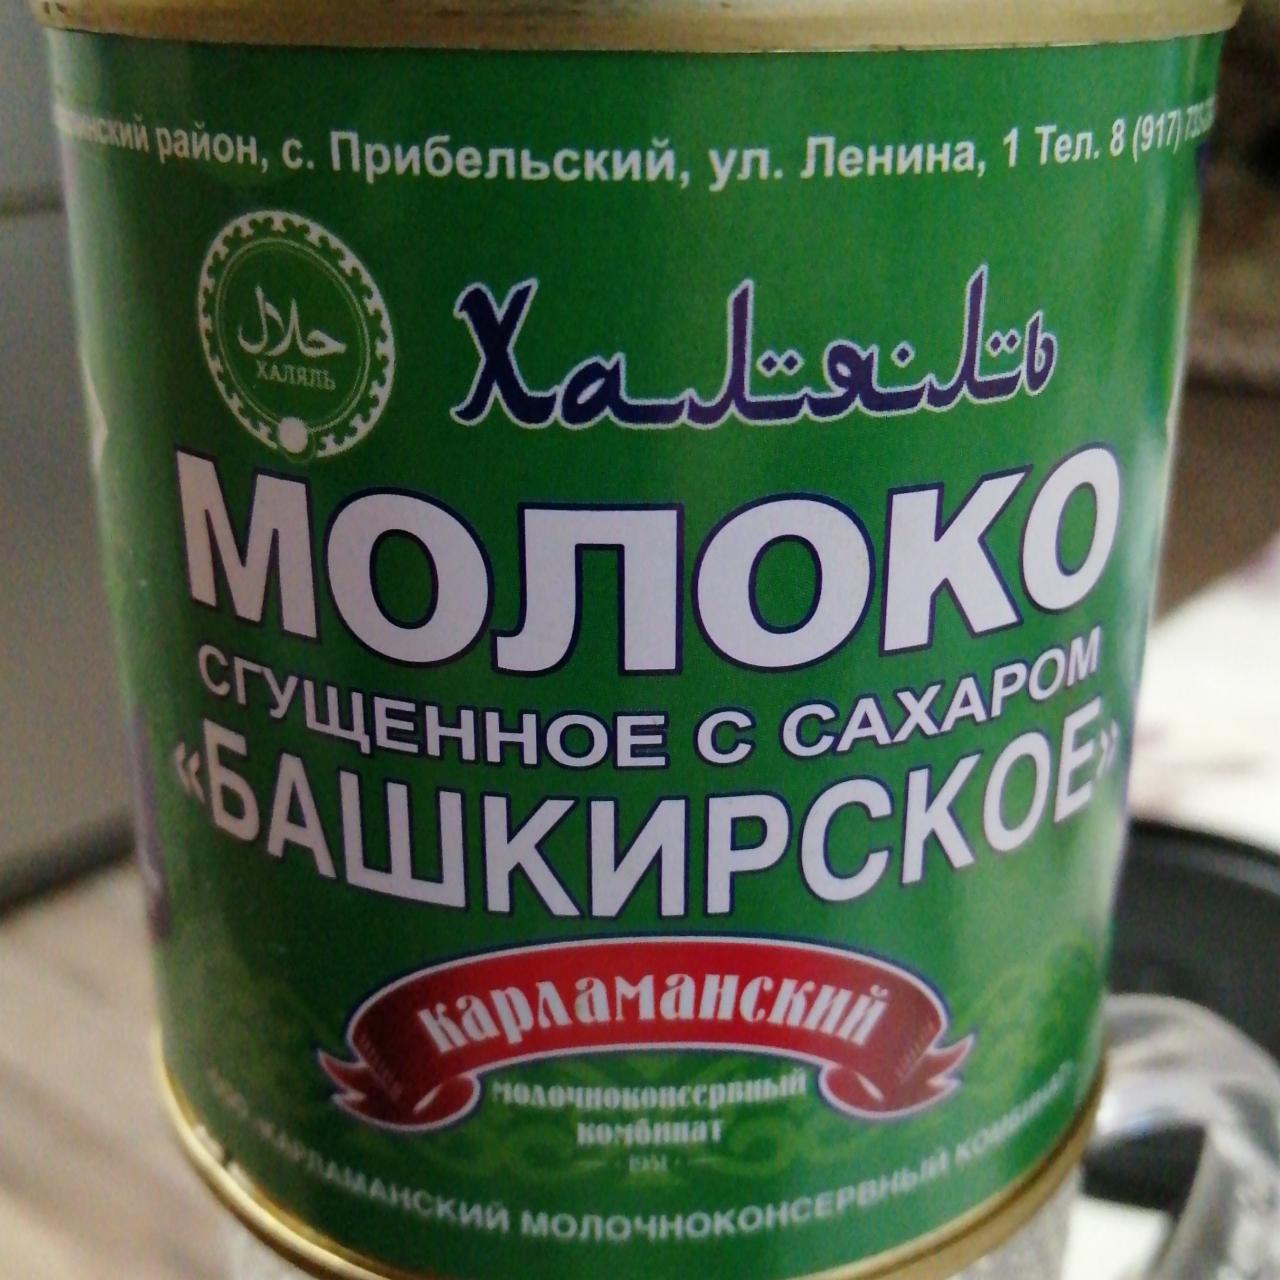 Фото - Молоко сгущеное Башкирское 1.5% Карламанский молочноконсервный комбинат